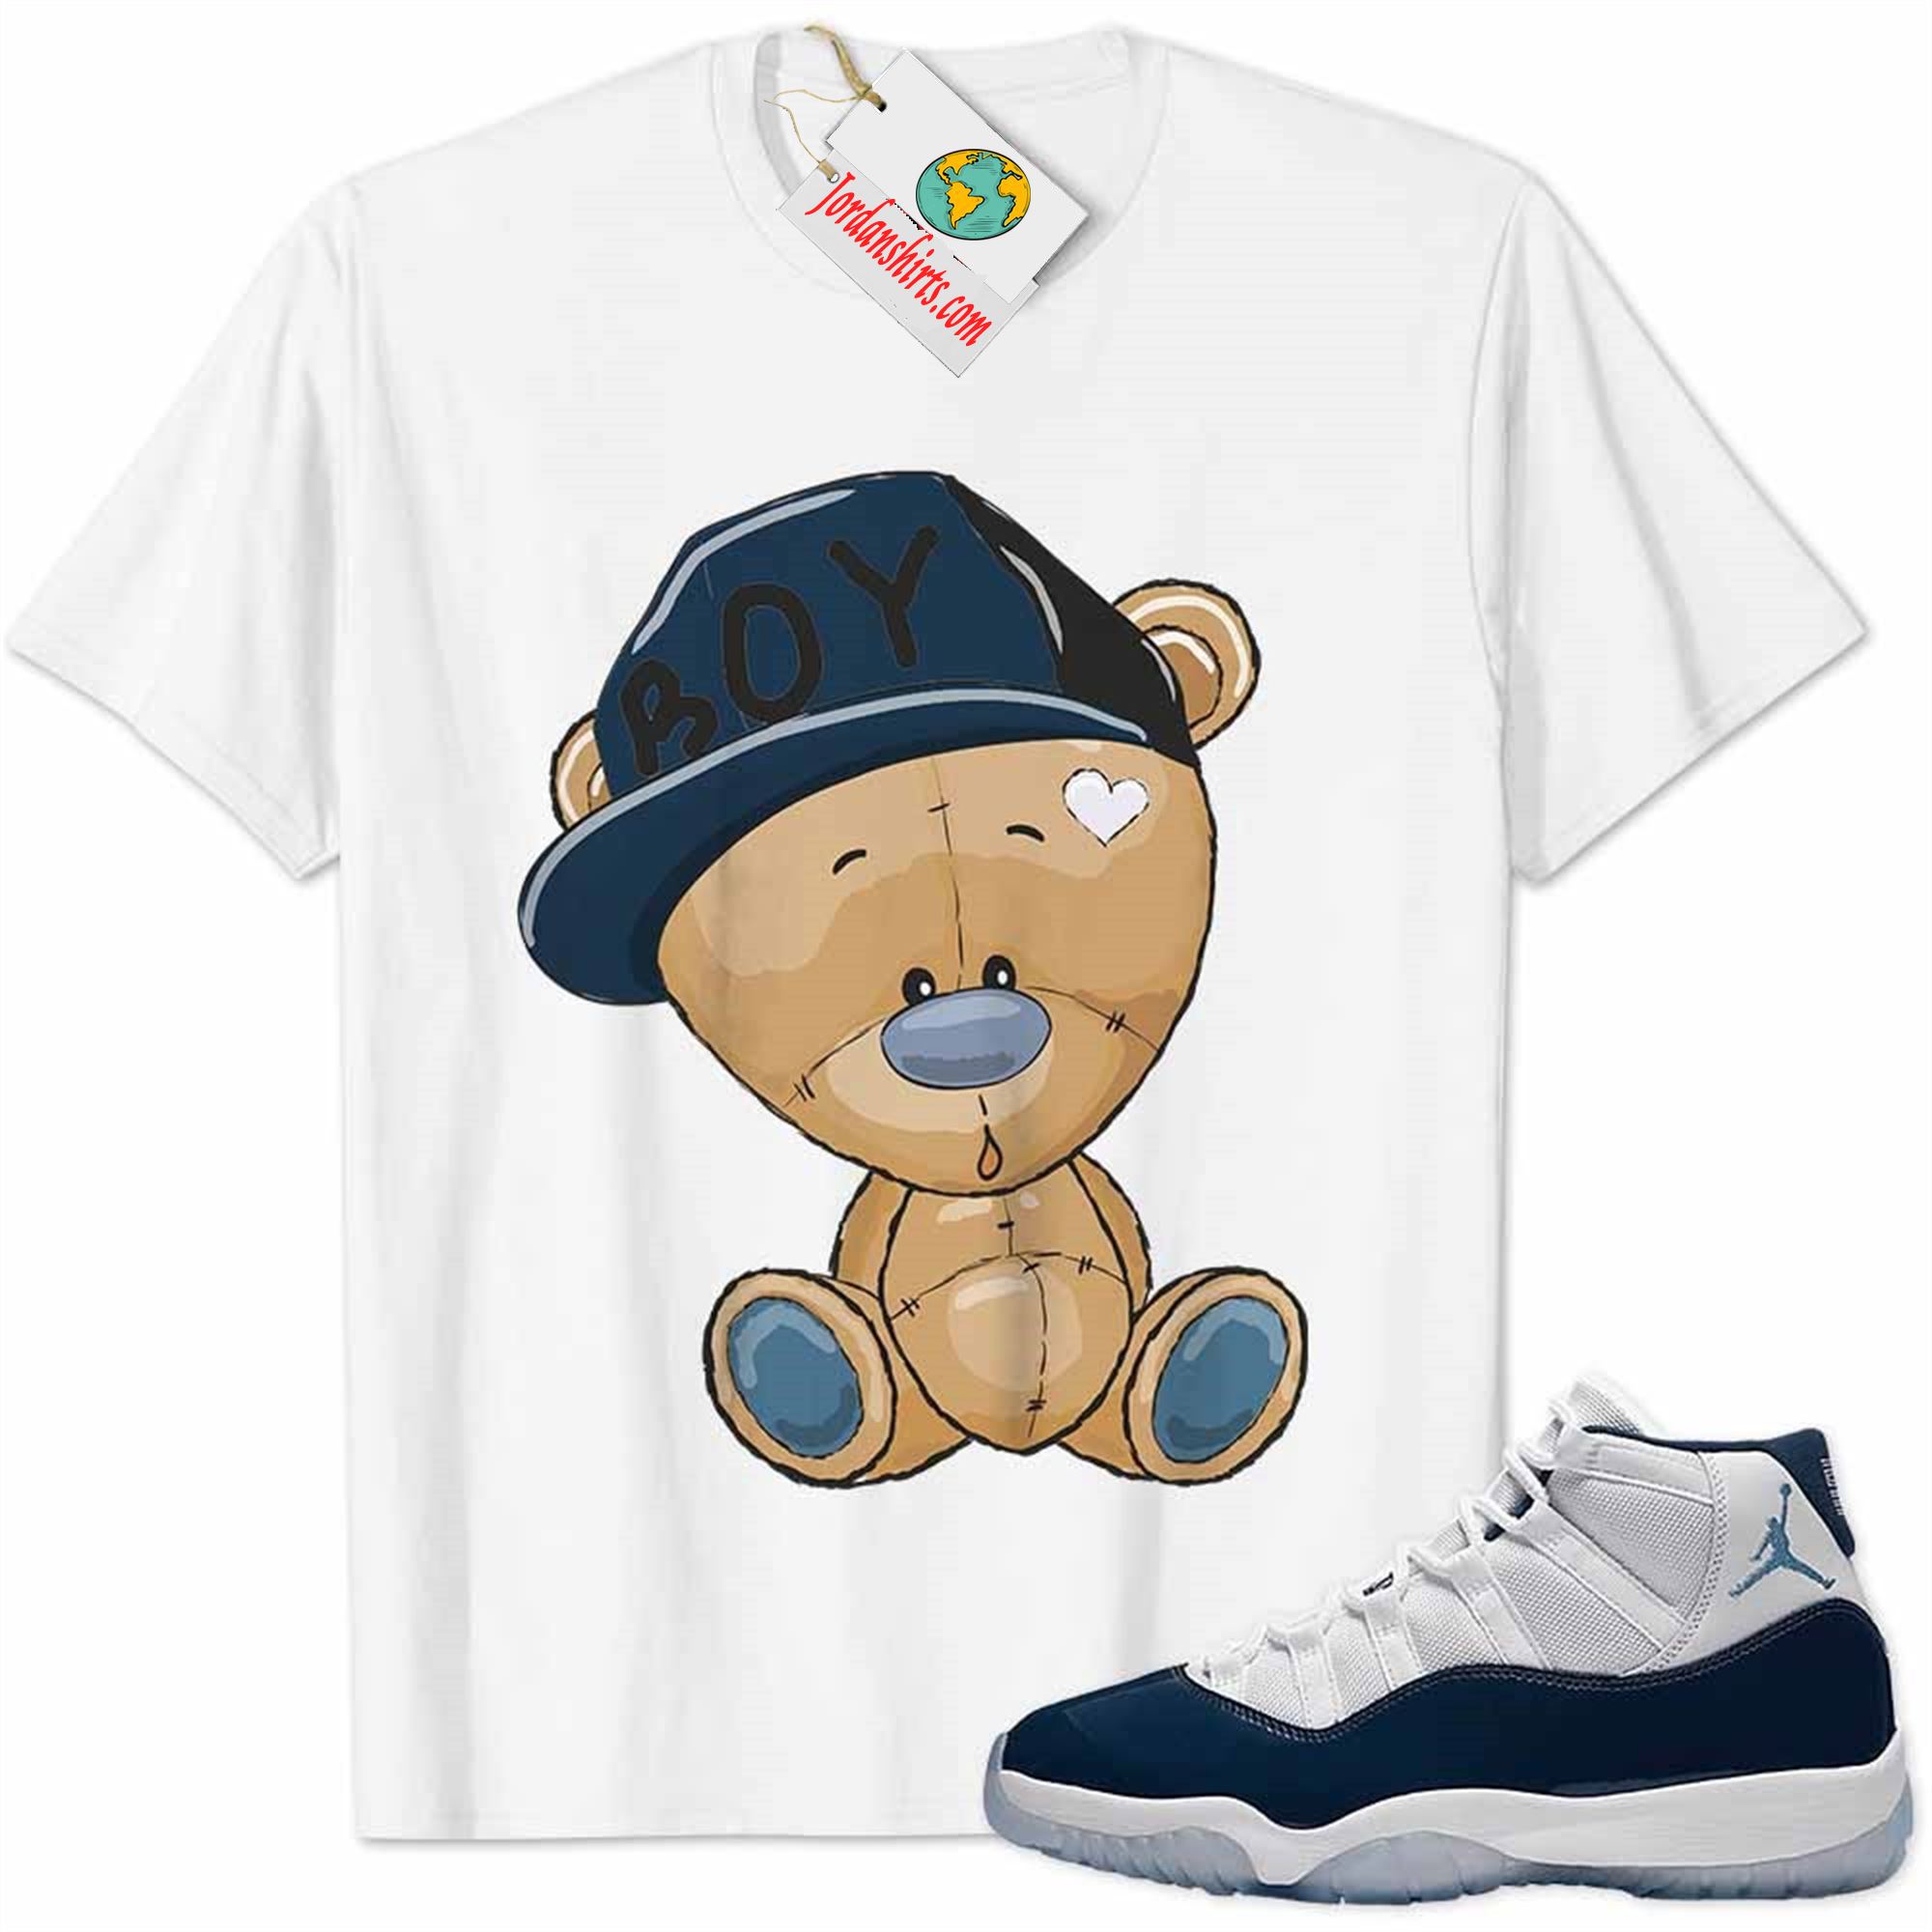 Jordan 11 Shirt, Jordan 11 Win Like 82 Shirt Cute Baby Teddy Bear White Plus Size Up To 5xl